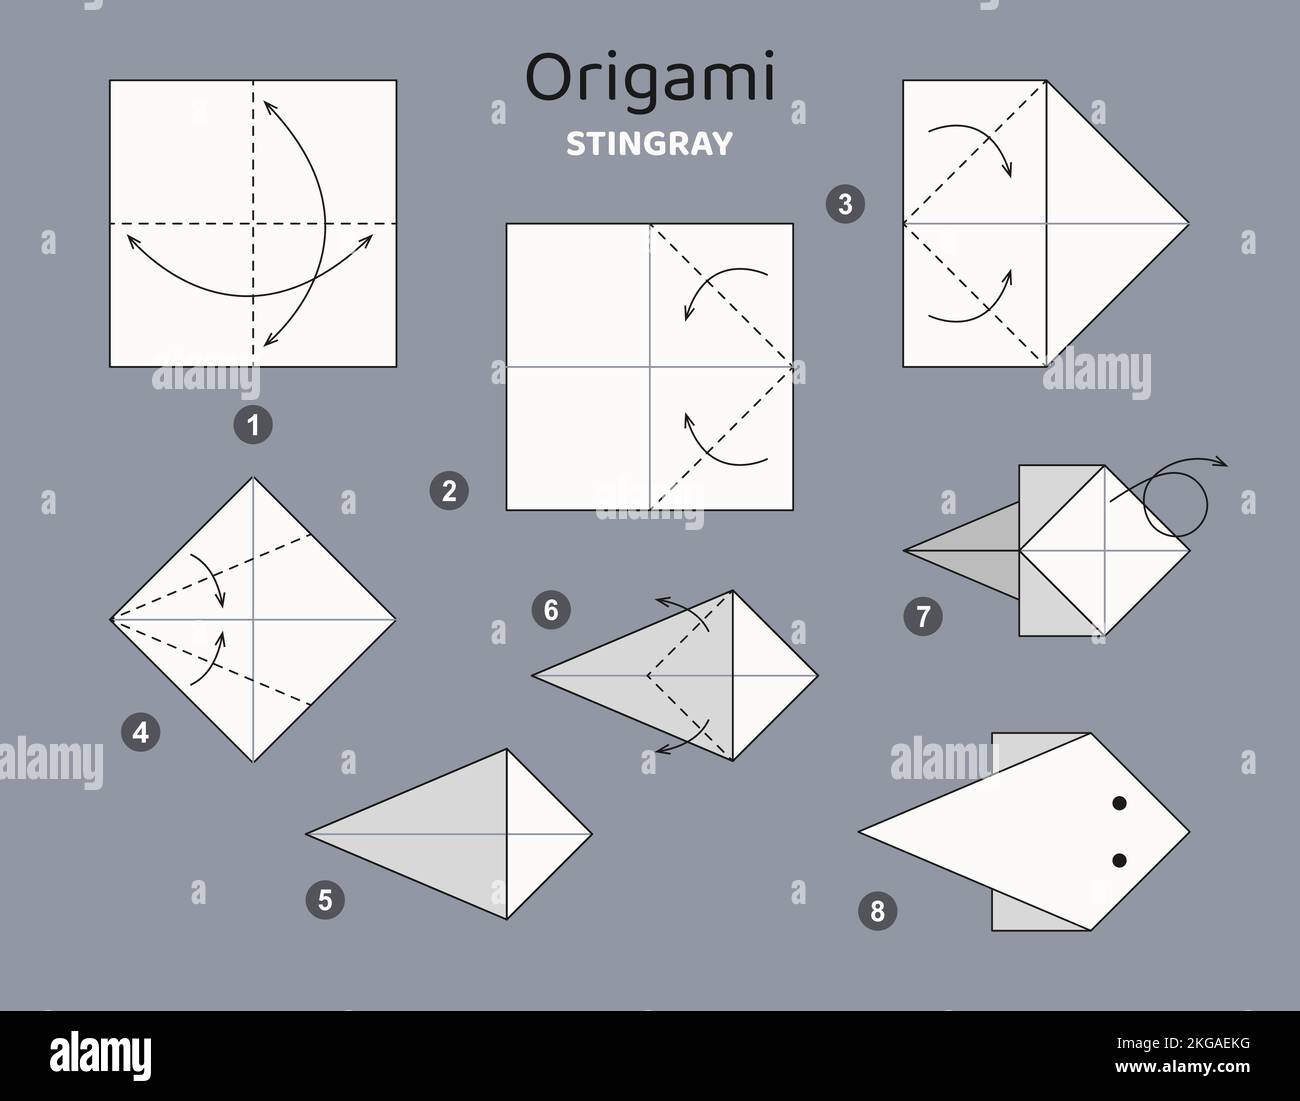 Origami-Tutorial. Origami-Schema für Kinder Stingray Stock Vektor